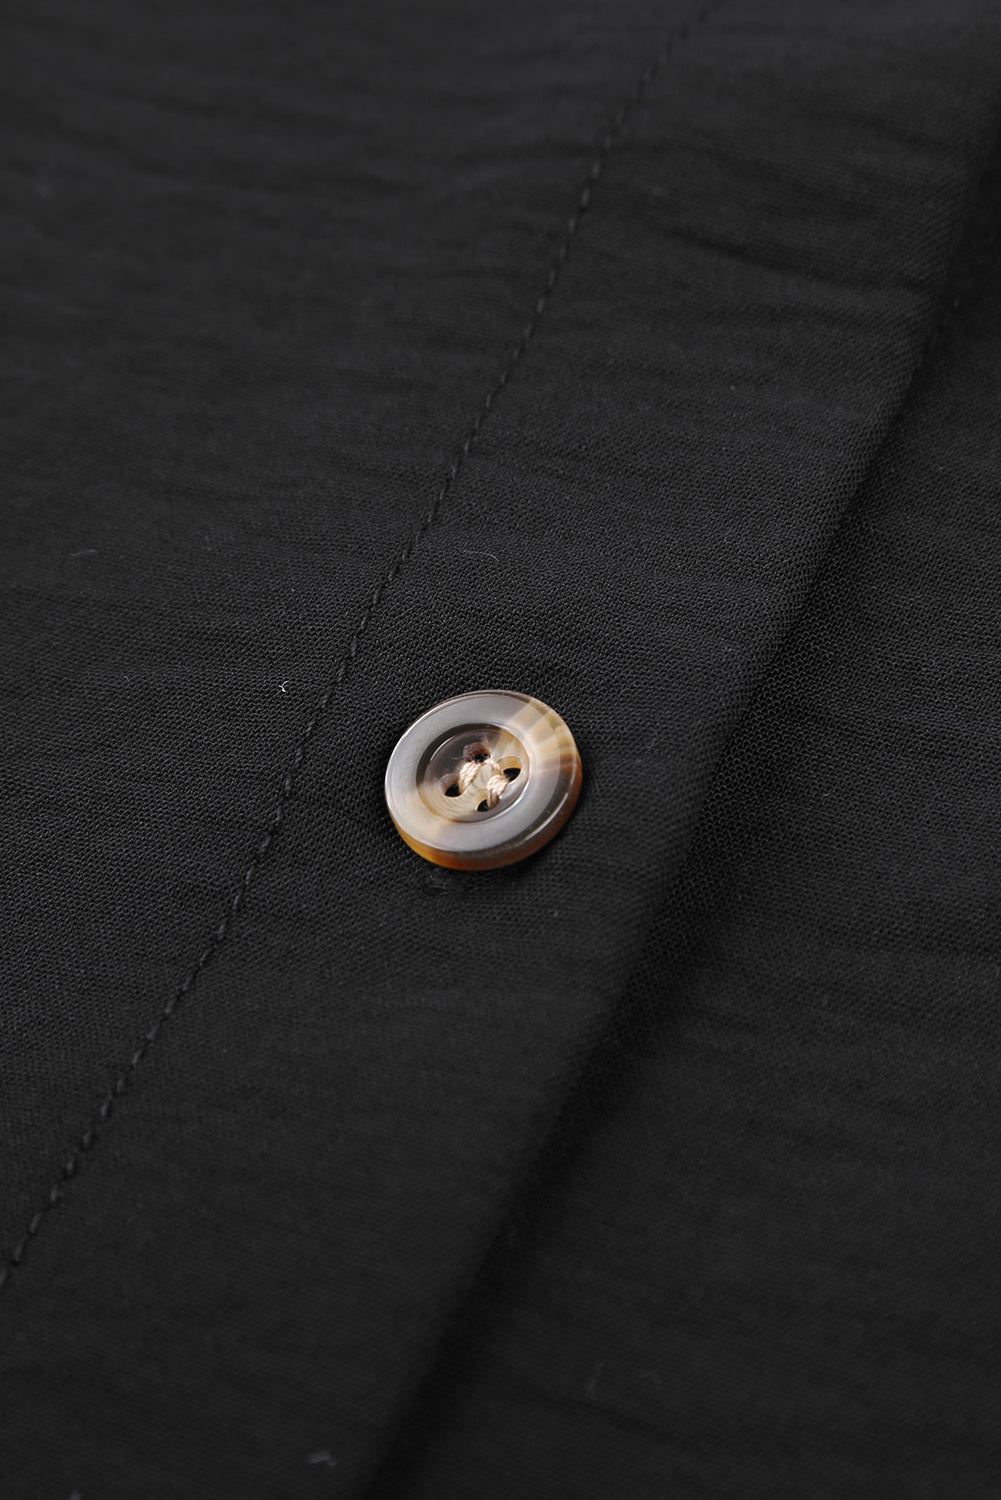 Black Cheetah Print Pocket Button Design Casual Shirt/Dress